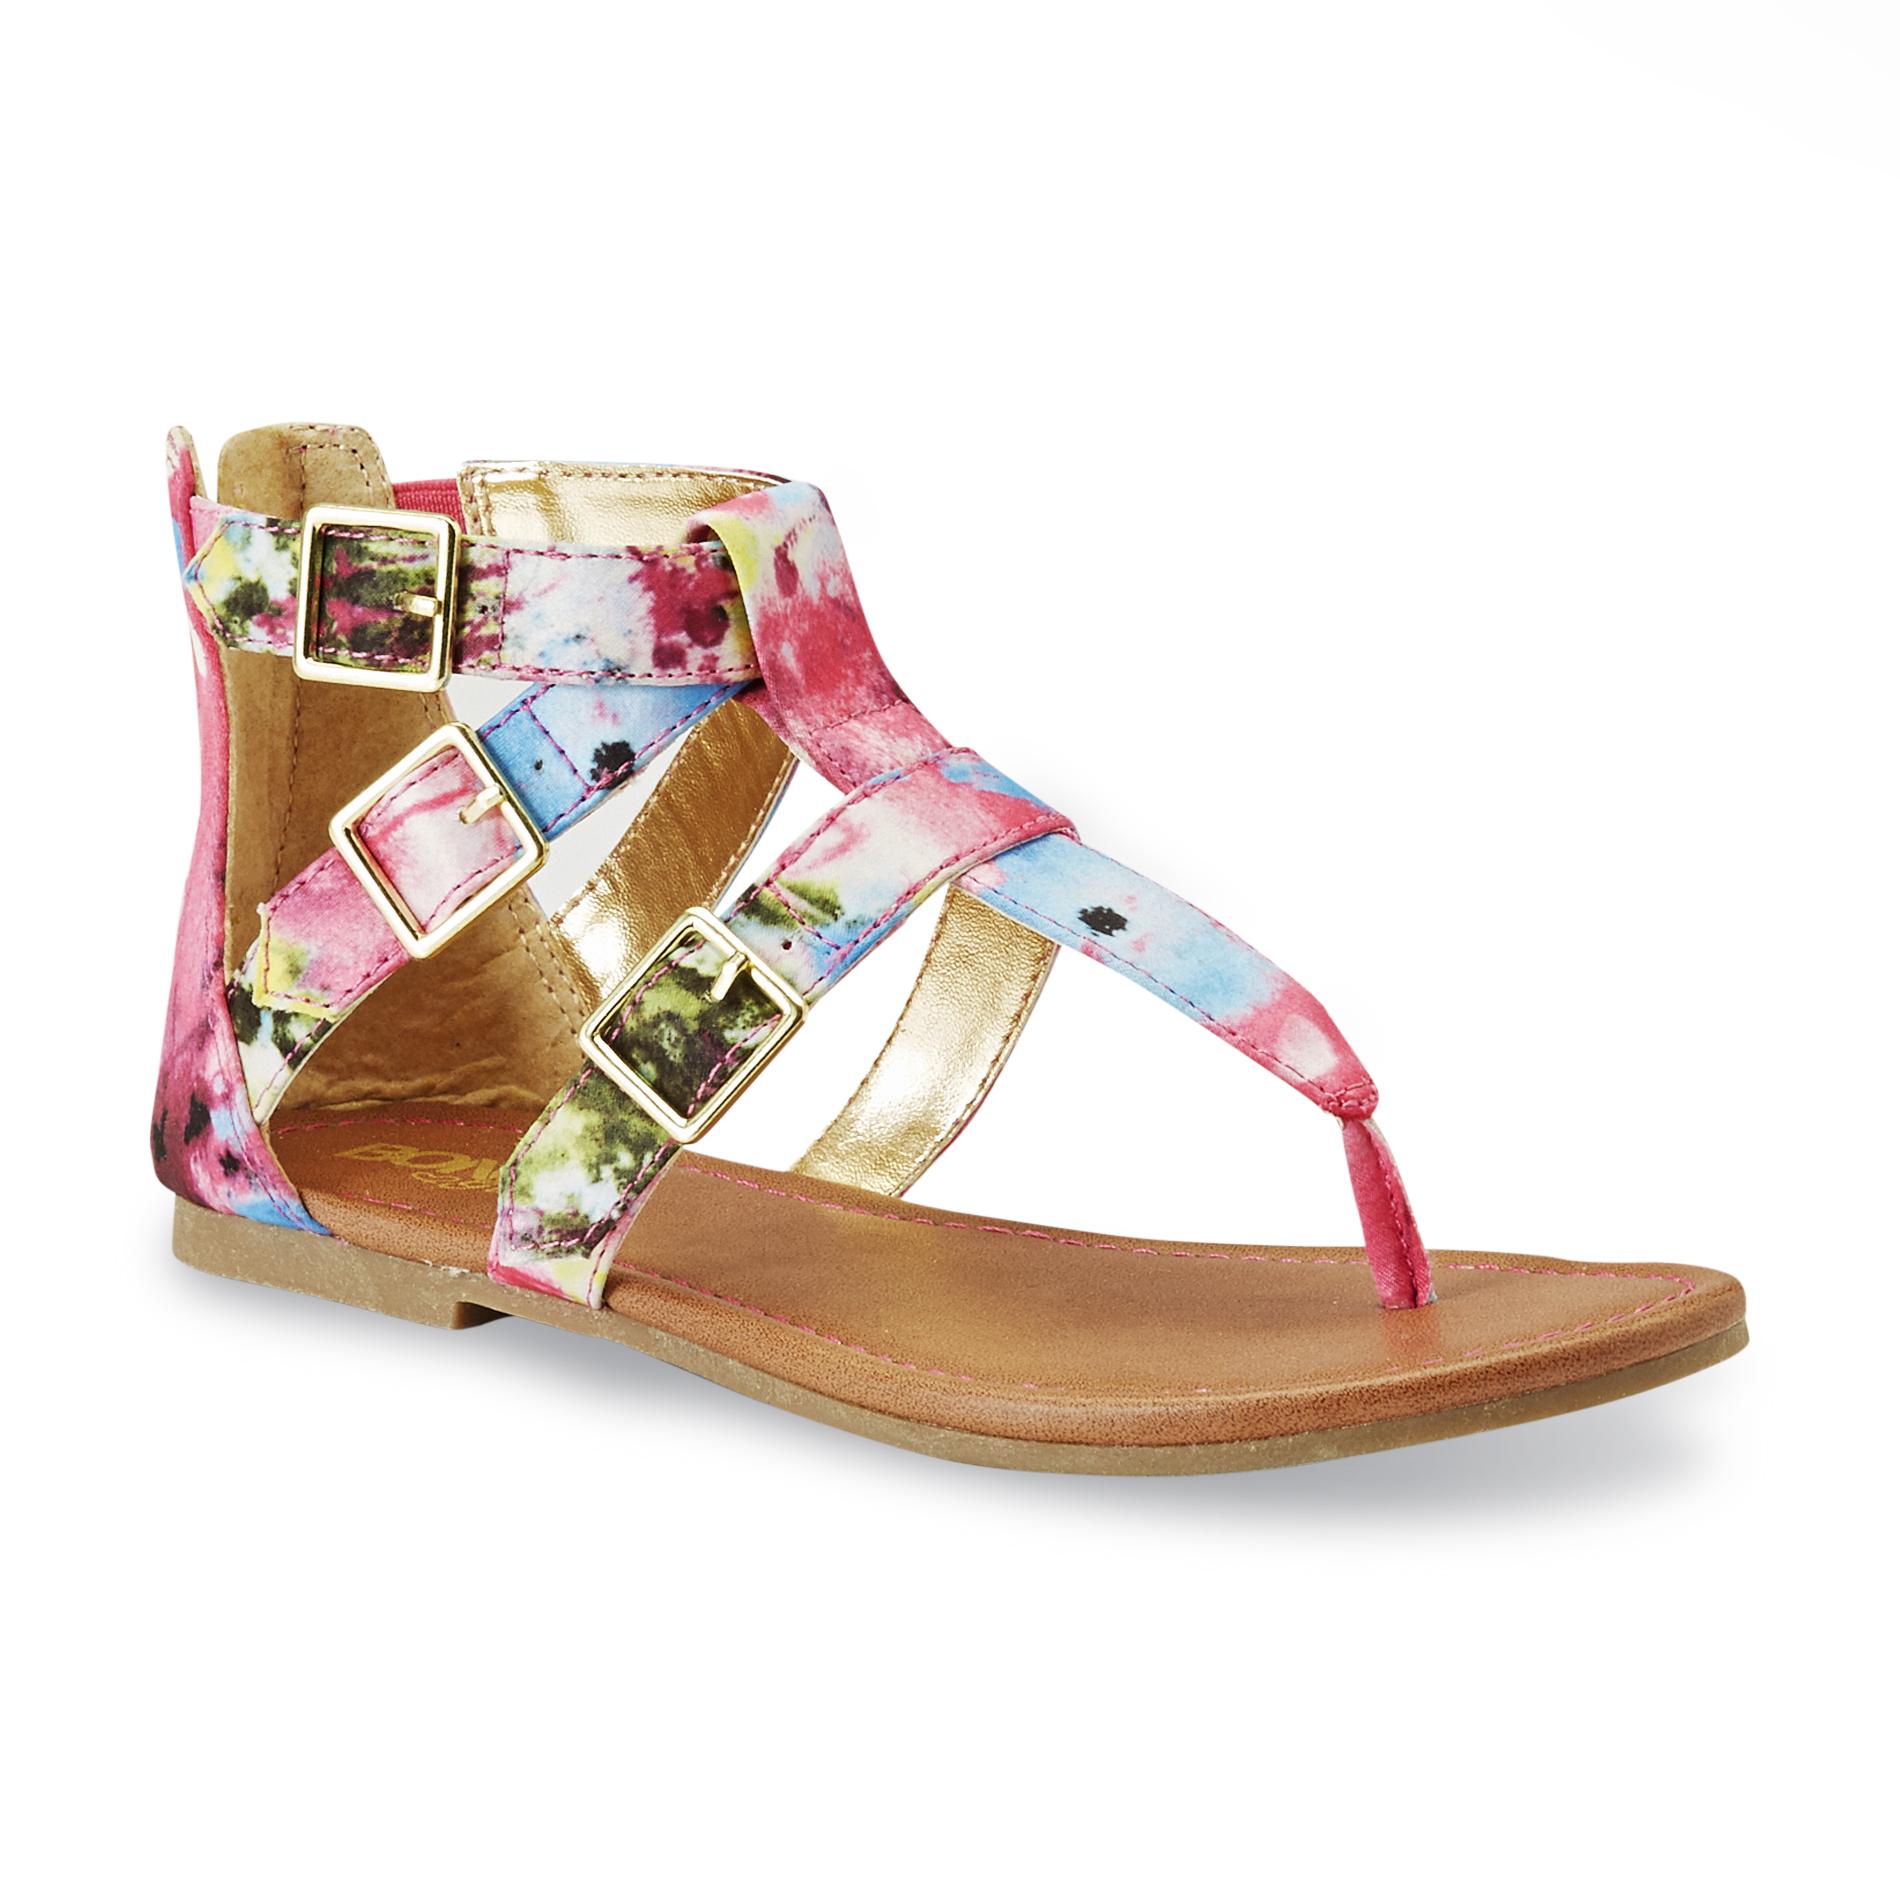 Bongo Girl's Rhonda Multicolor/Tie-Dye Gladiator Sandal